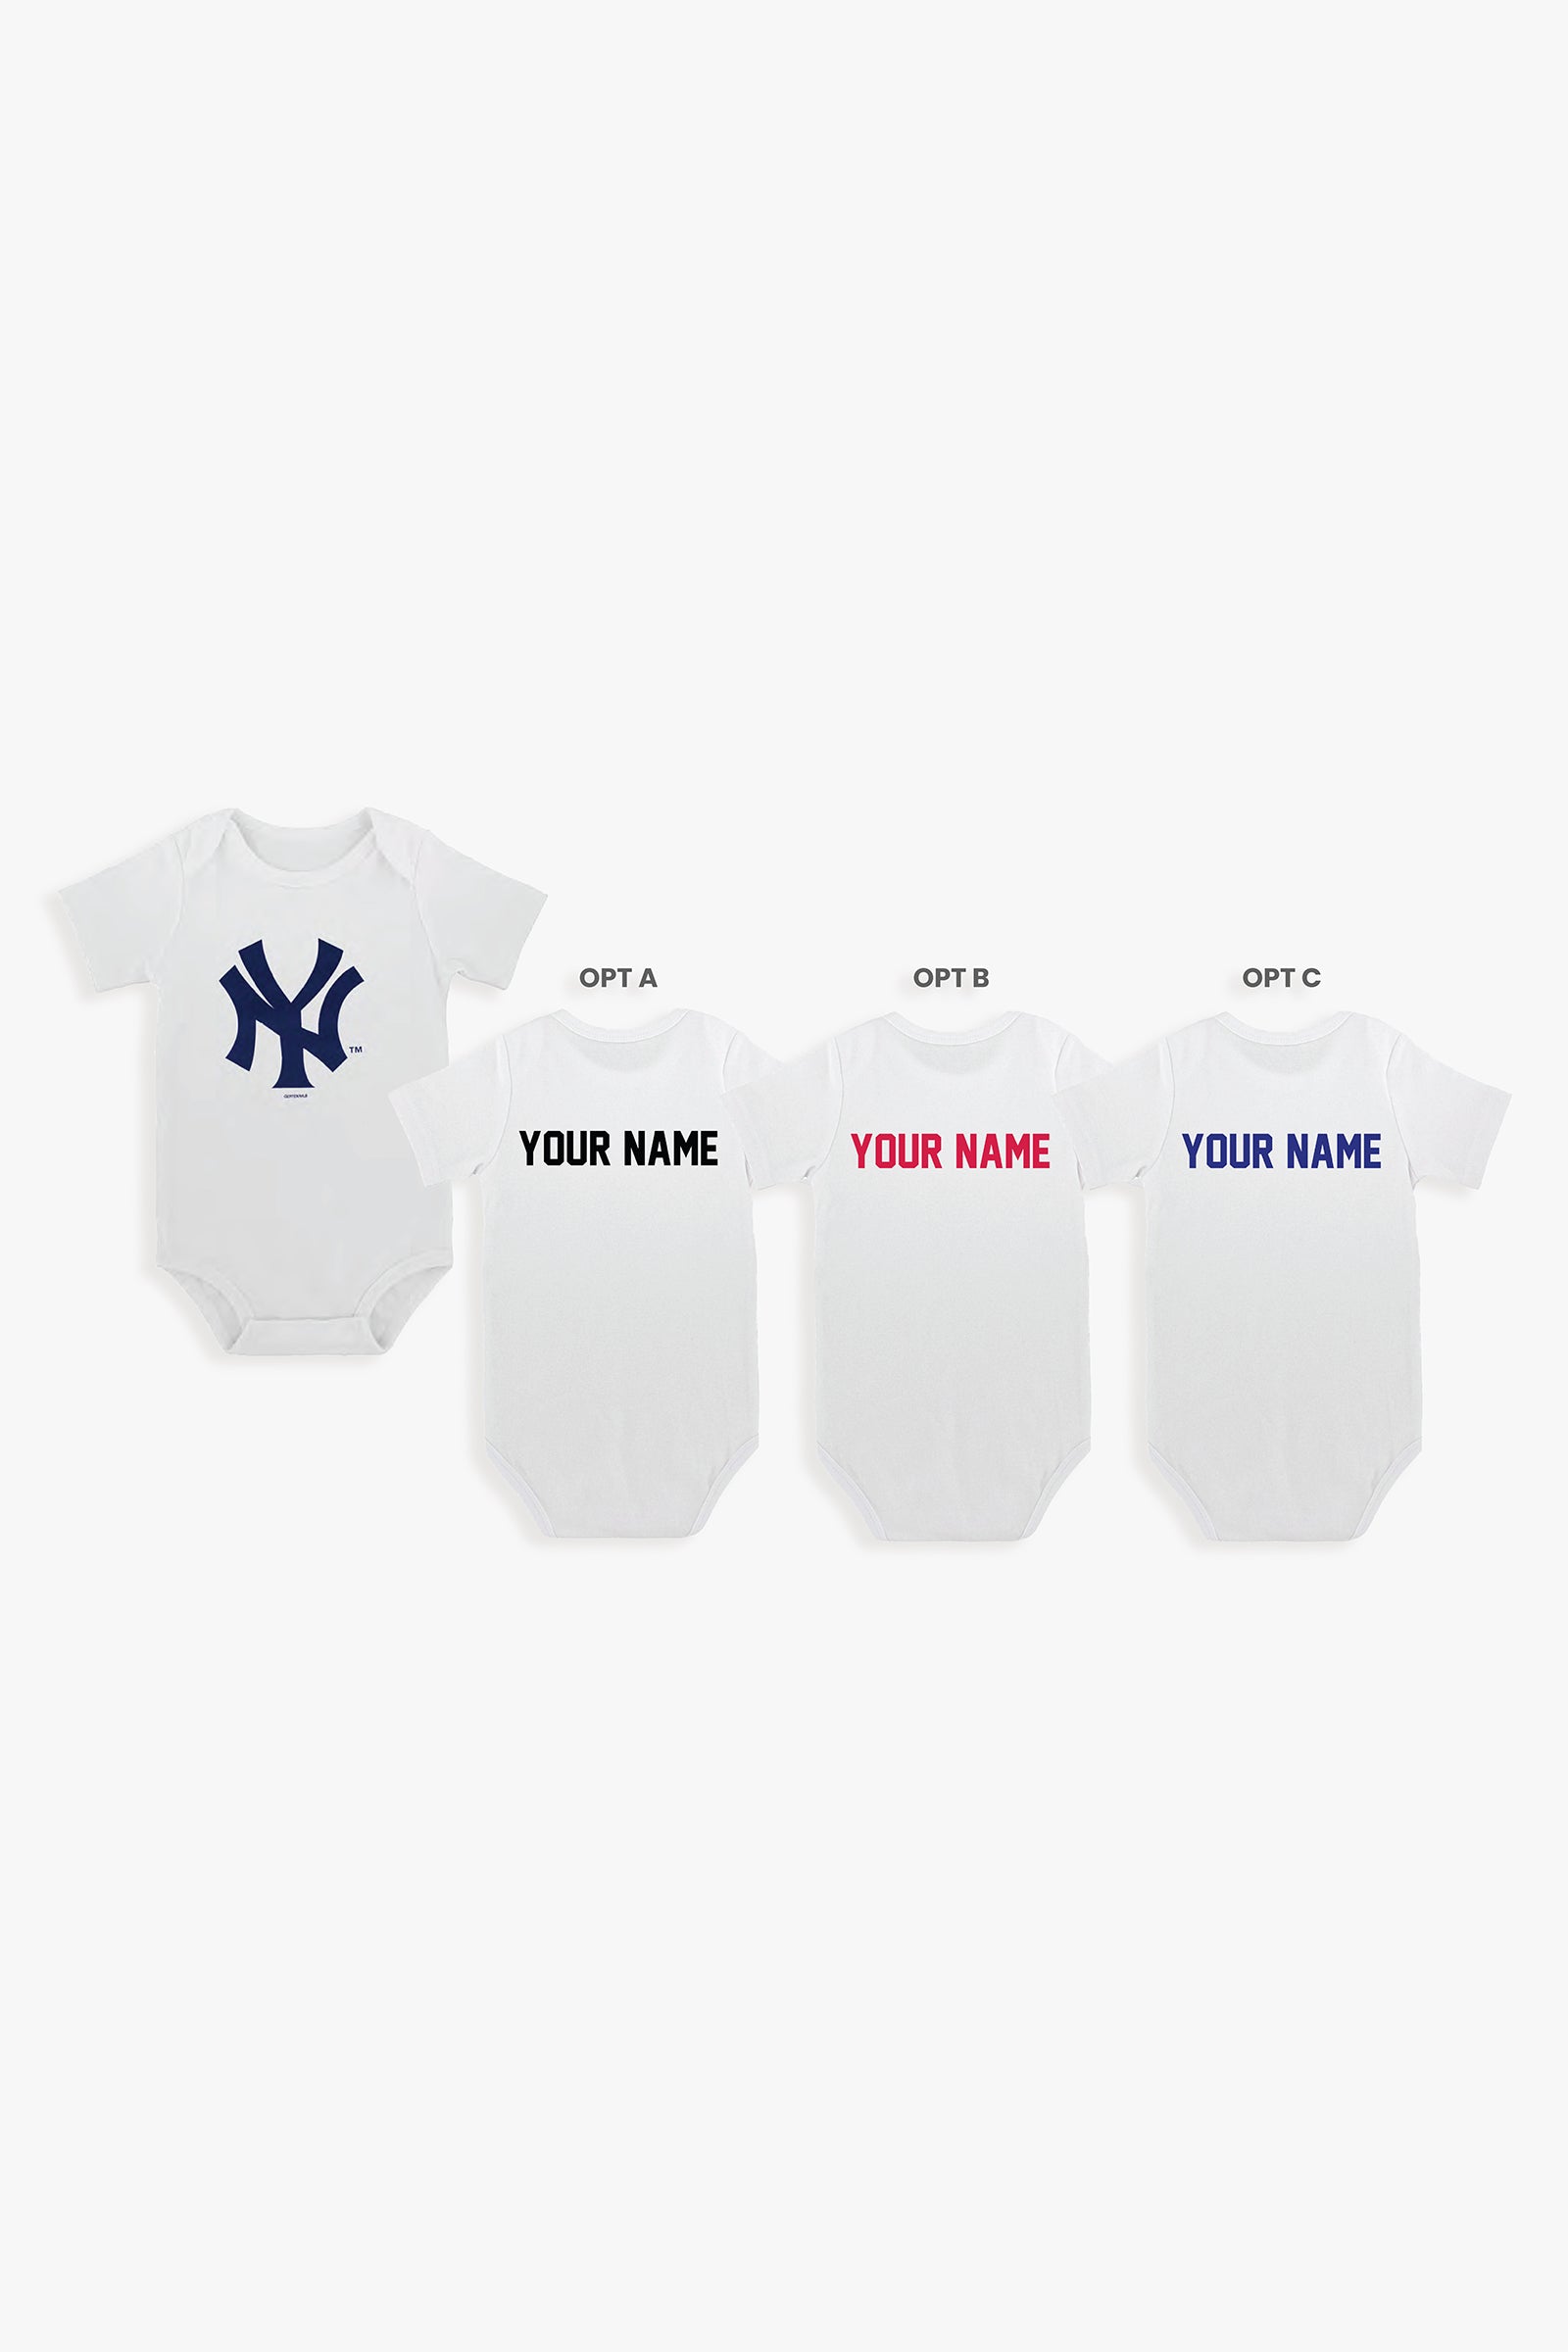 New York Yankees Baby Apparel, Baby Yankees Clothing, Merchandise